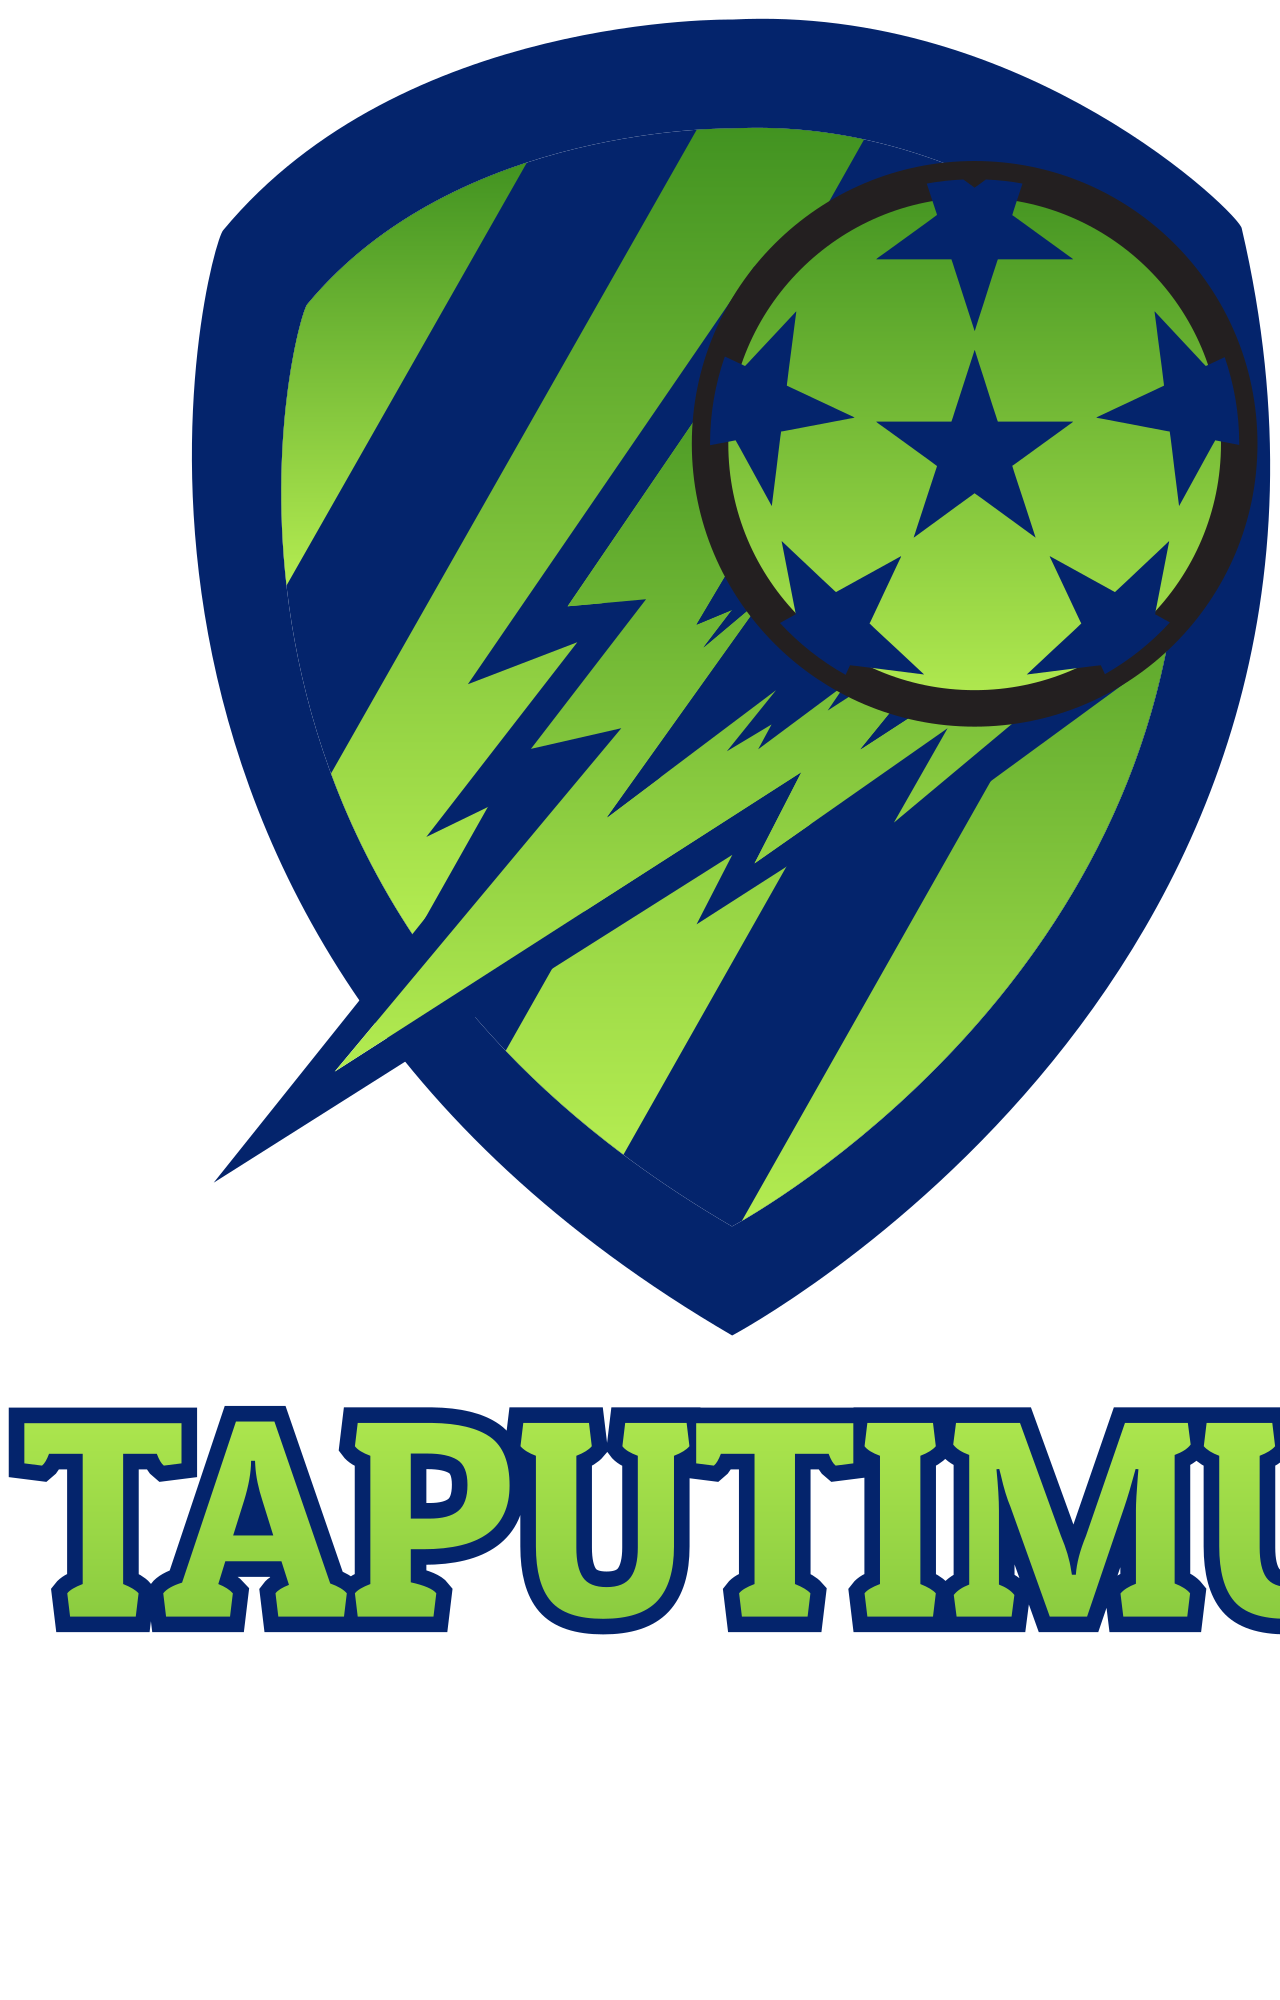 TAPUTIMU 
's logo